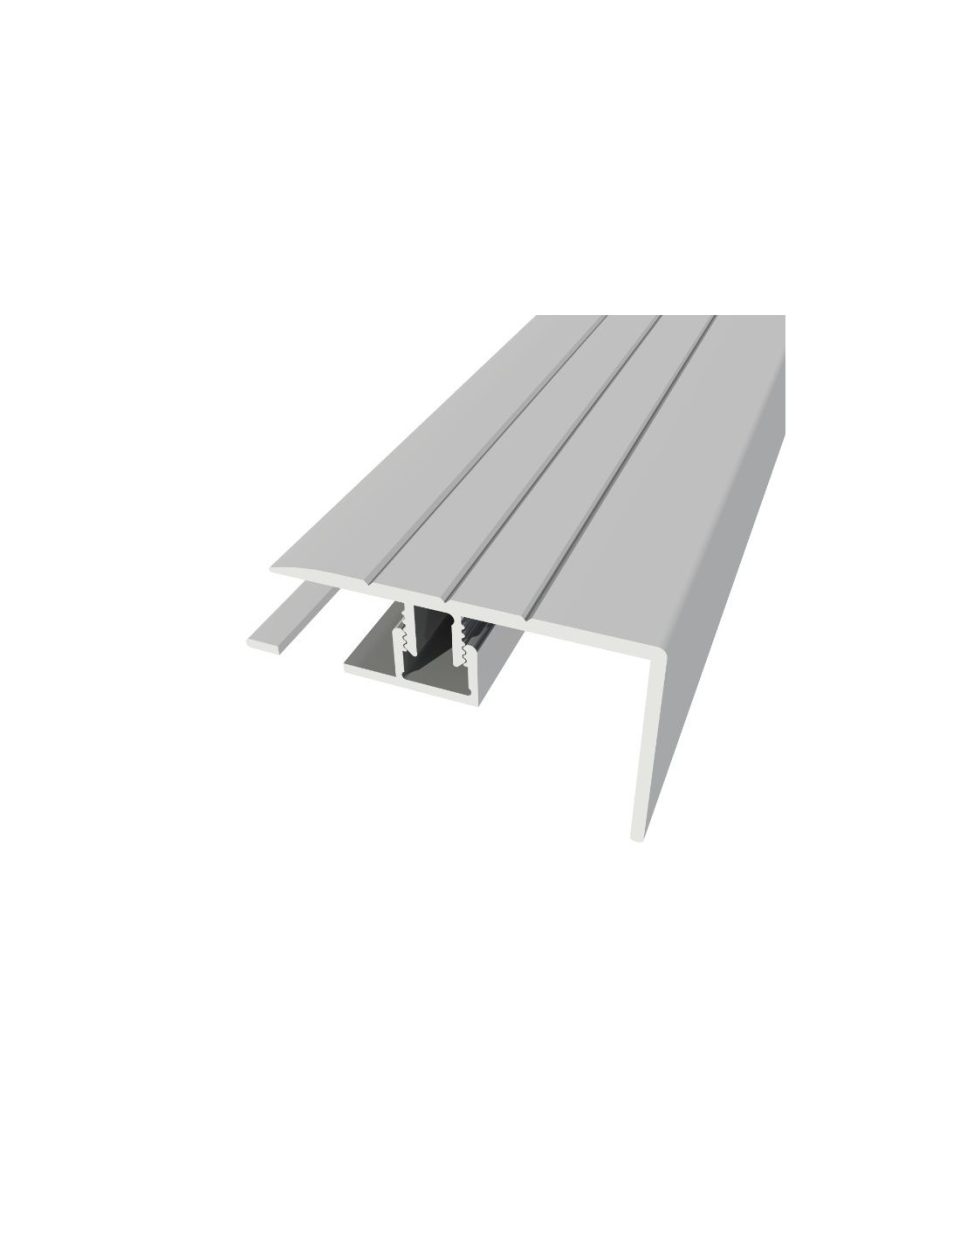 PERFIL R 61 Escadaria de alumínio de 40x25 mm com base 5-9 mm Sistema Multifix​ DIM: 2700 x 40 x 25 mm​